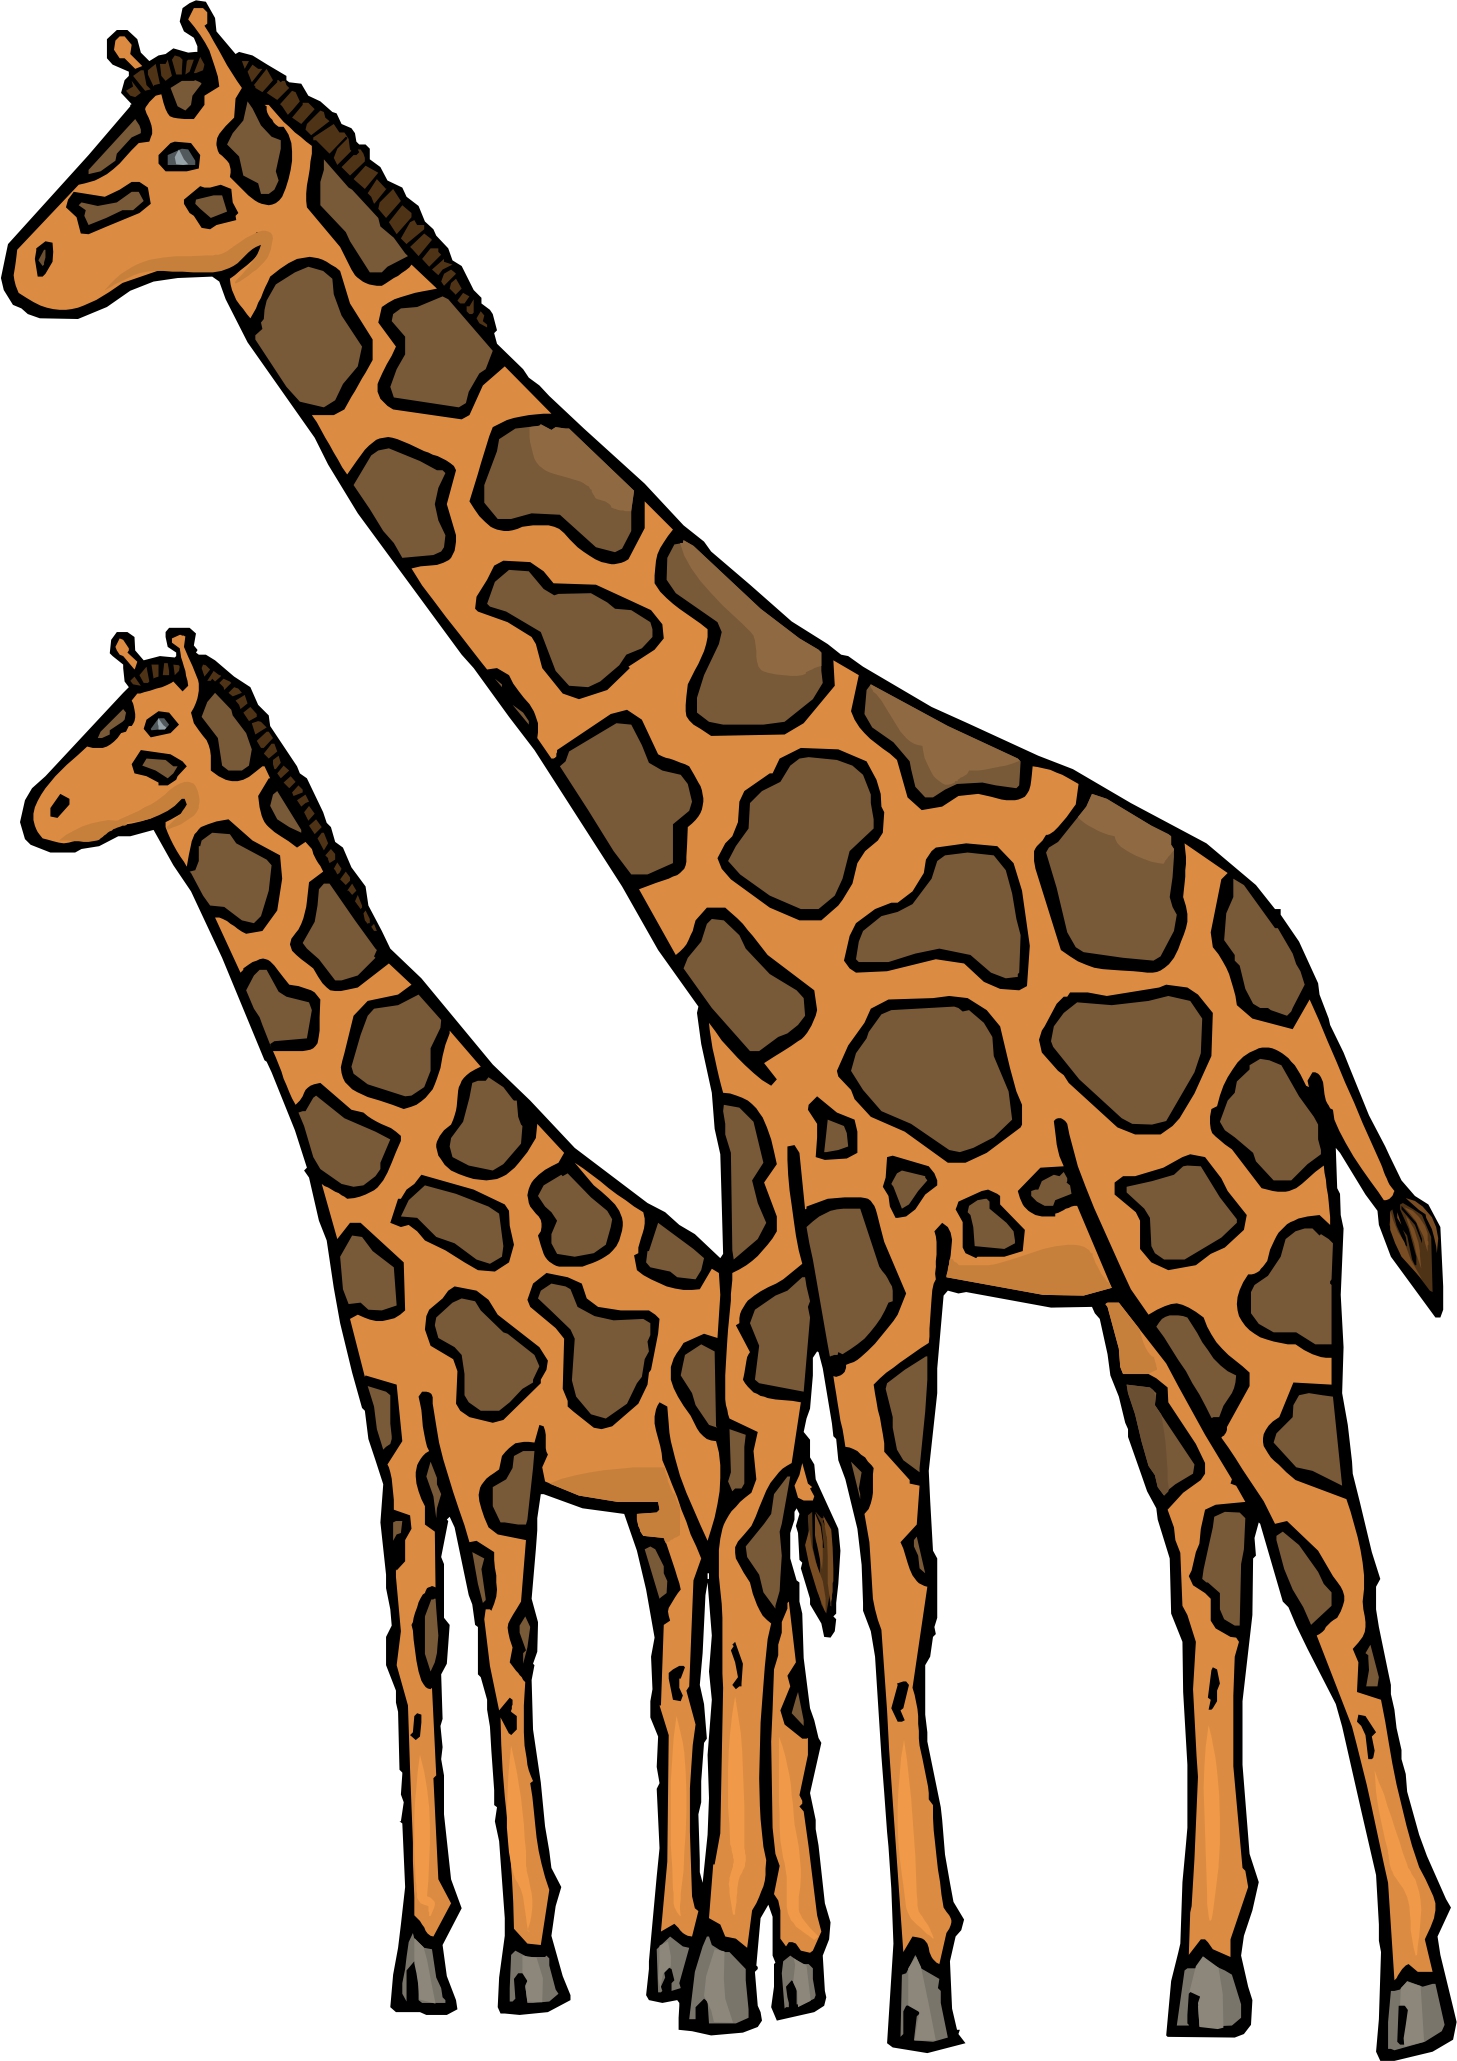 Cartoon Animals cute Images Pictures Clipart 2013: Cartoon Giraffe